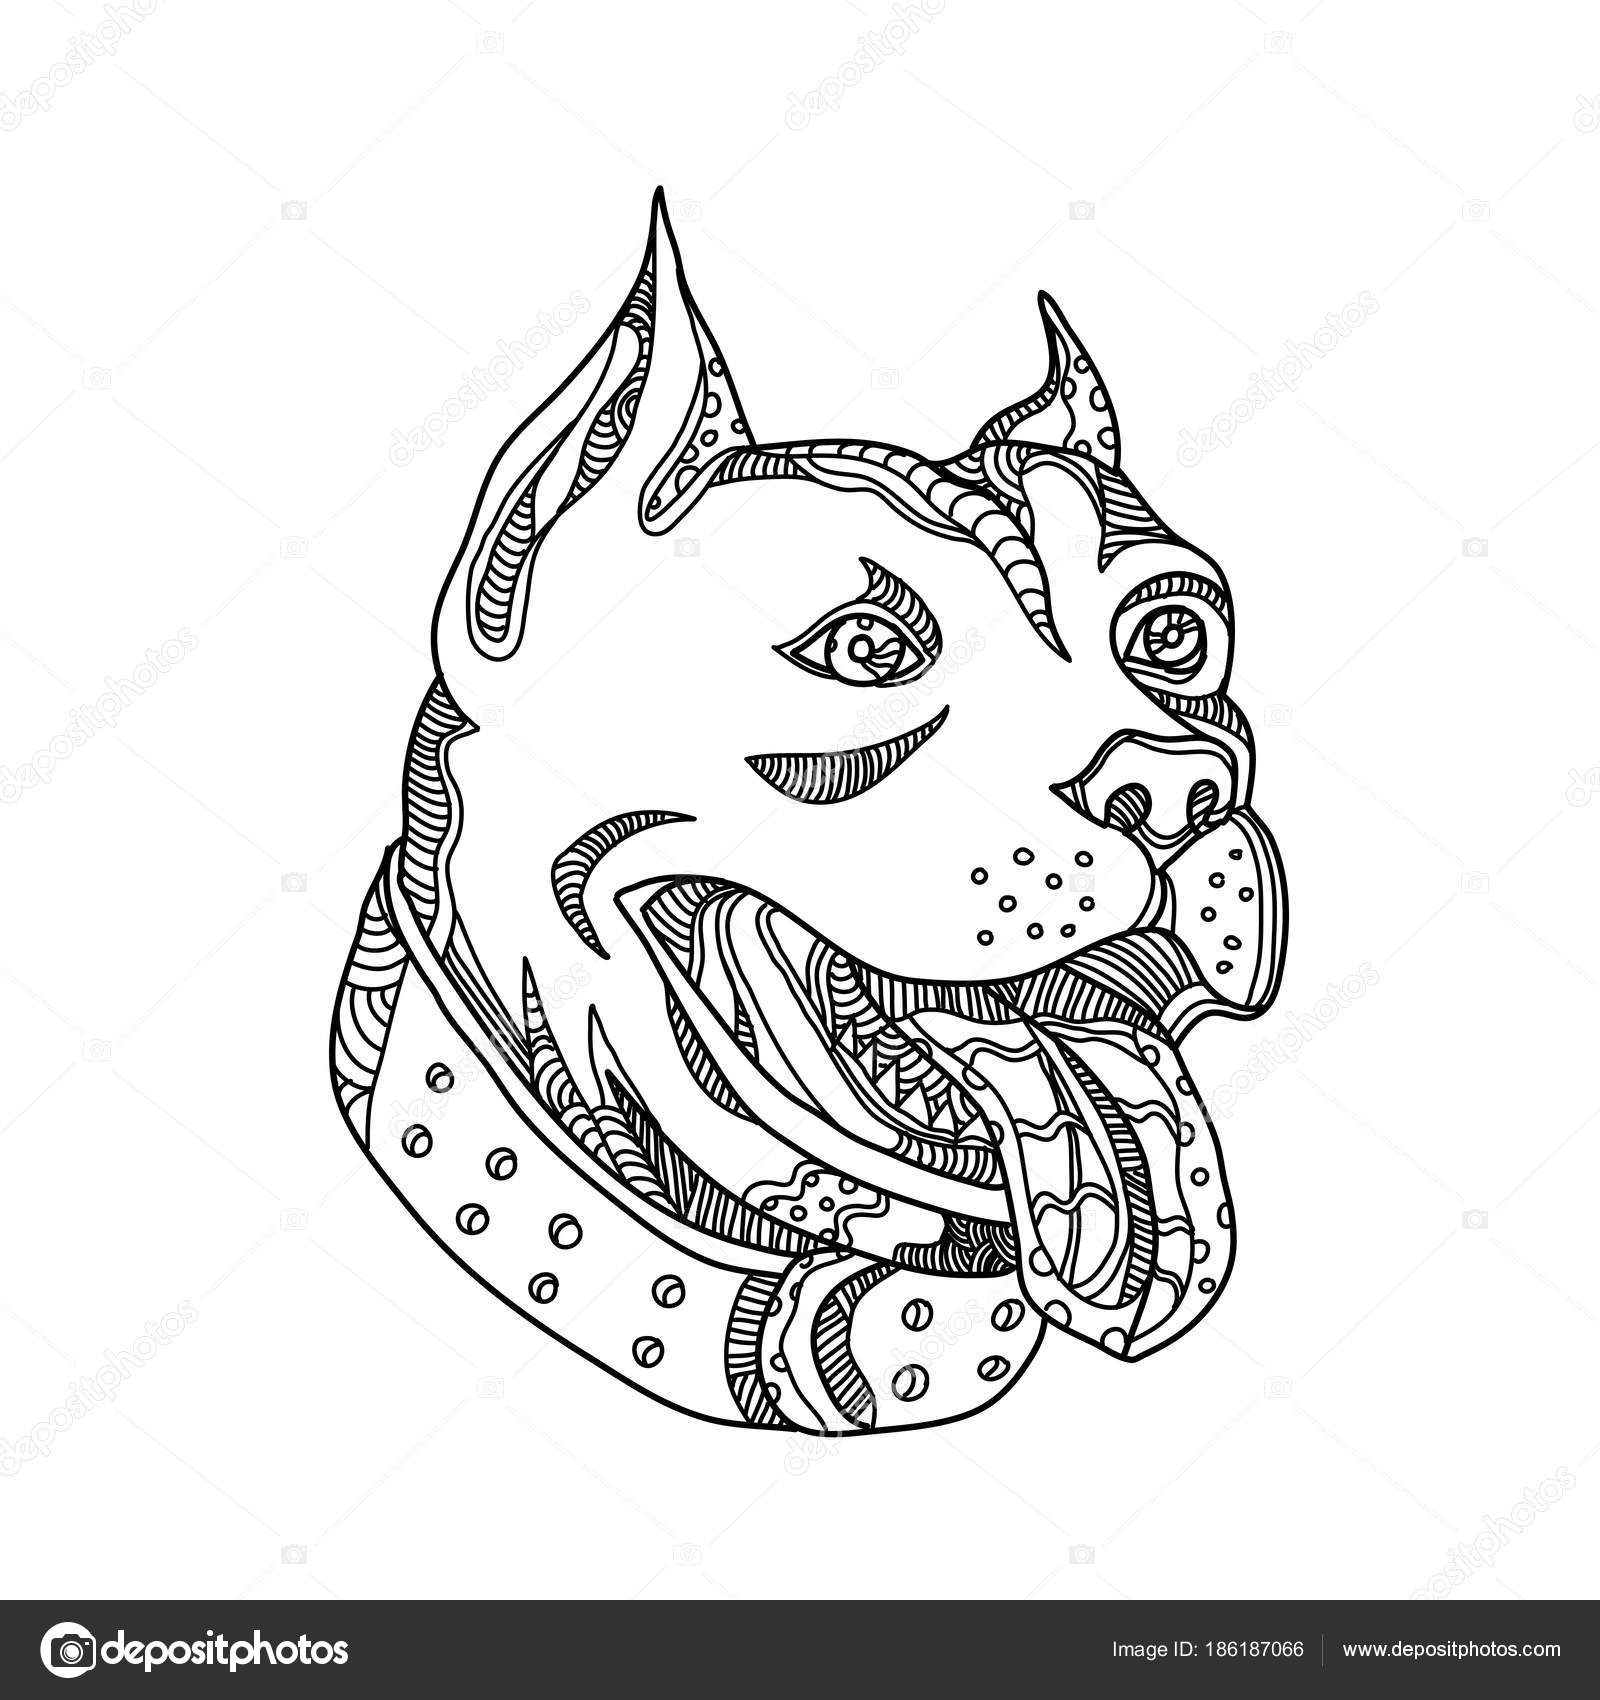 Pitbull Head Drawing at GetDrawings | Free download